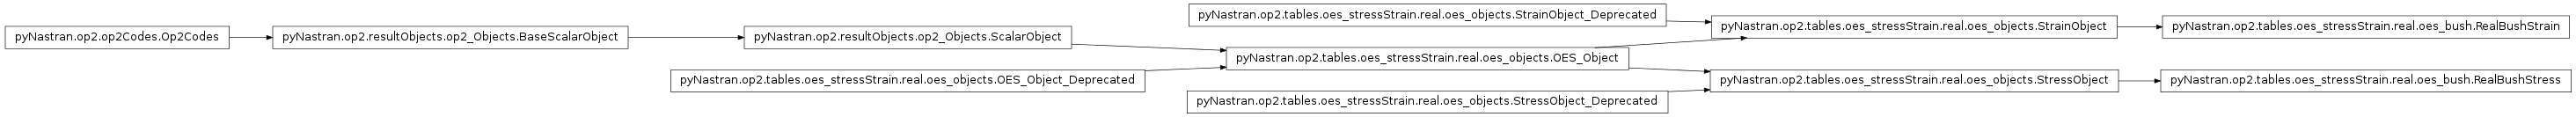 Inheritance diagram of pyNastran.op2.tables.oes_stressStrain.real.oes_bush